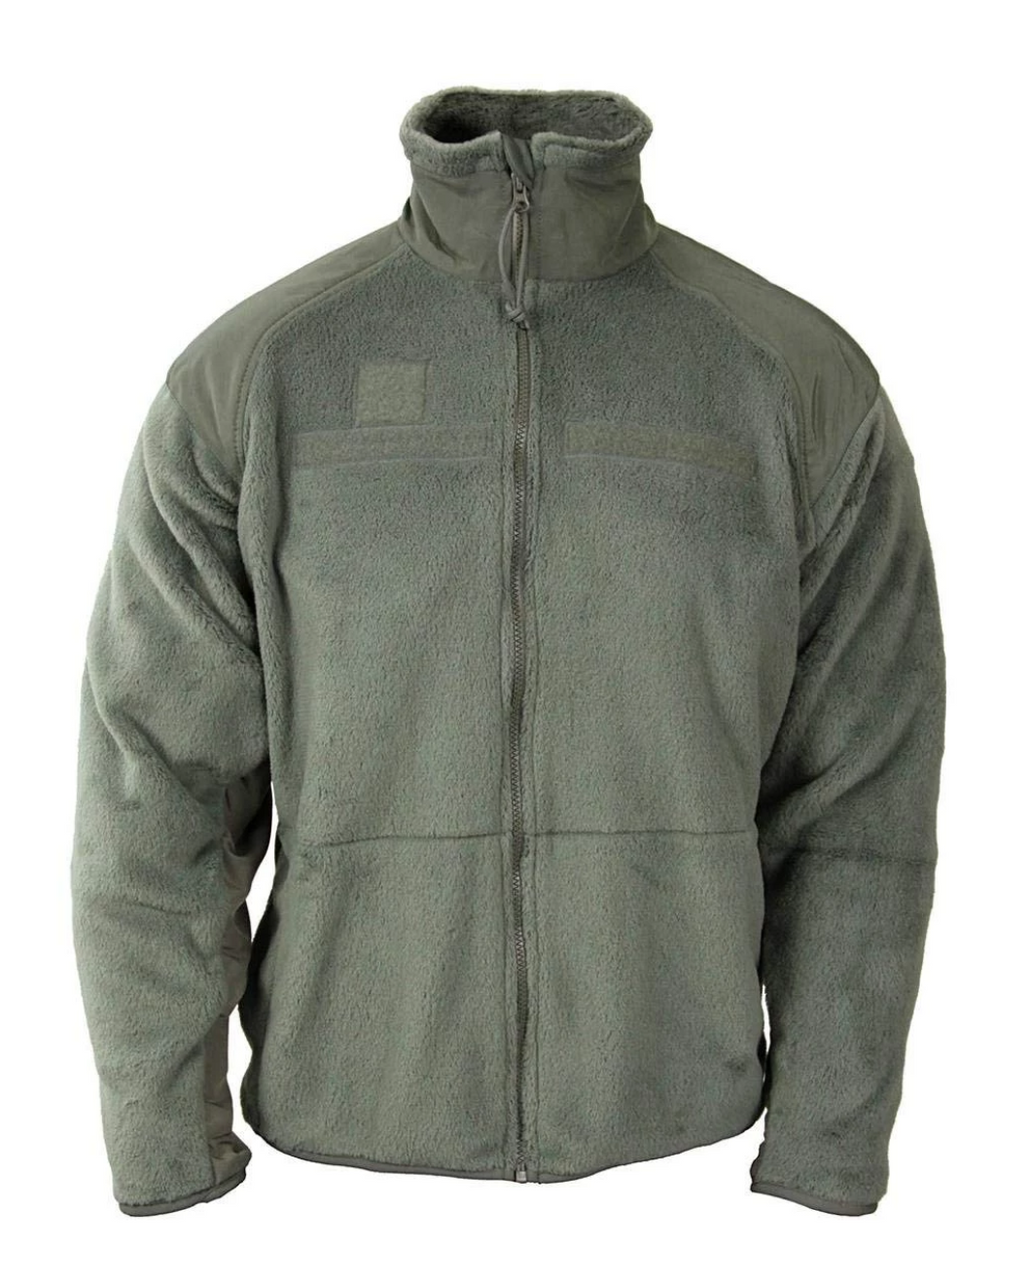 US Fleece Jacke GEN III Level 3 Cold Weather Military Outdoor Army Jacket Foliag 